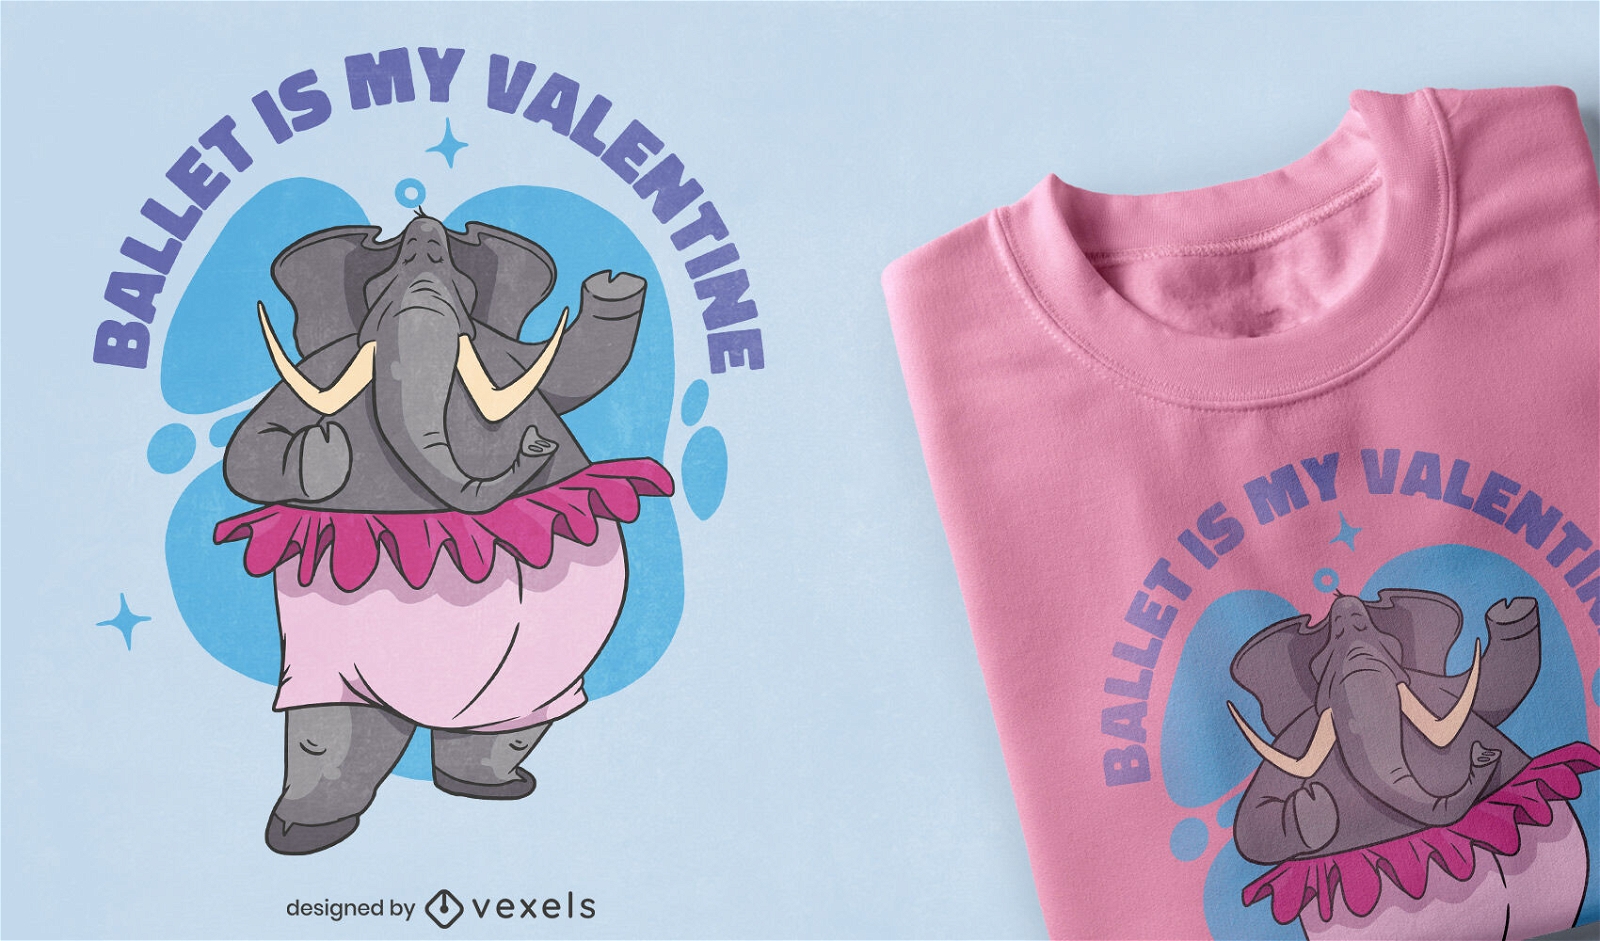 Ballet dancer elephant t-shirt design